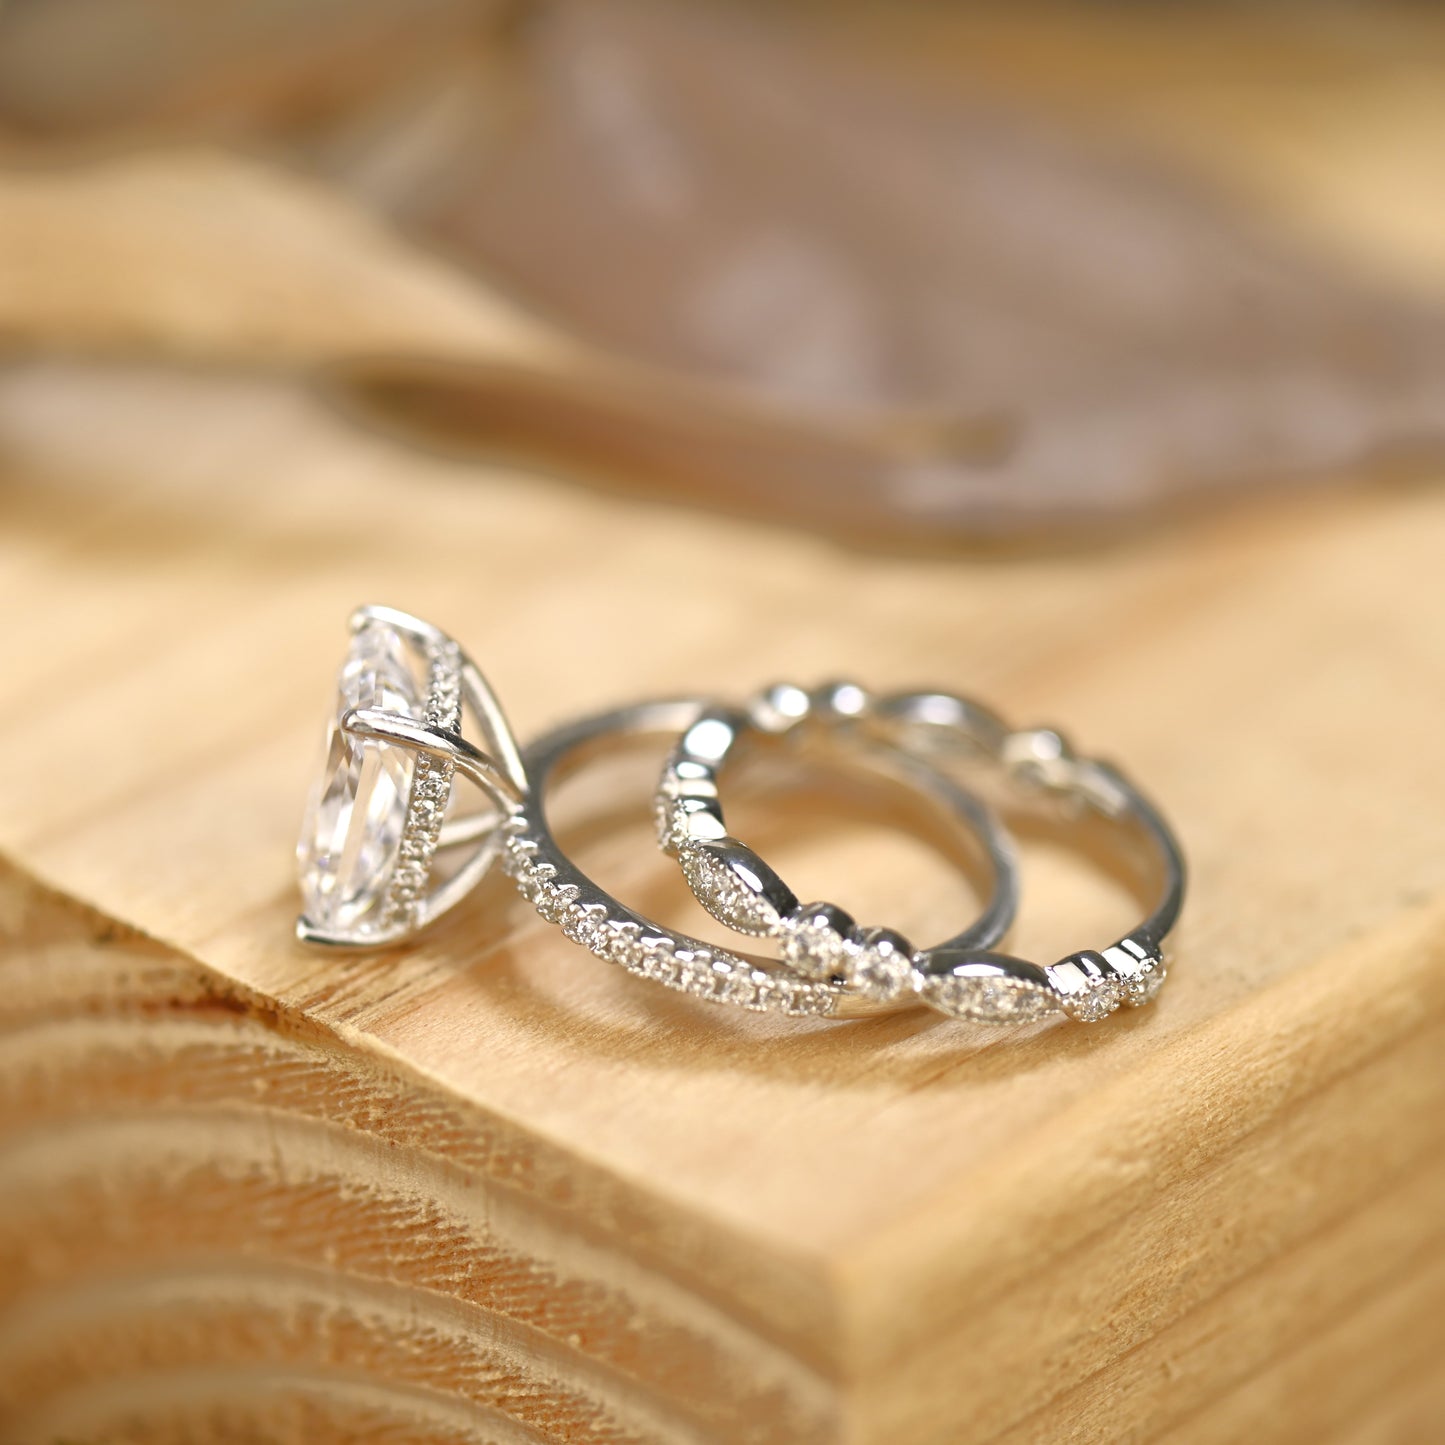 2.75Ct Radiant Cut Diamond Engagement Ring Set